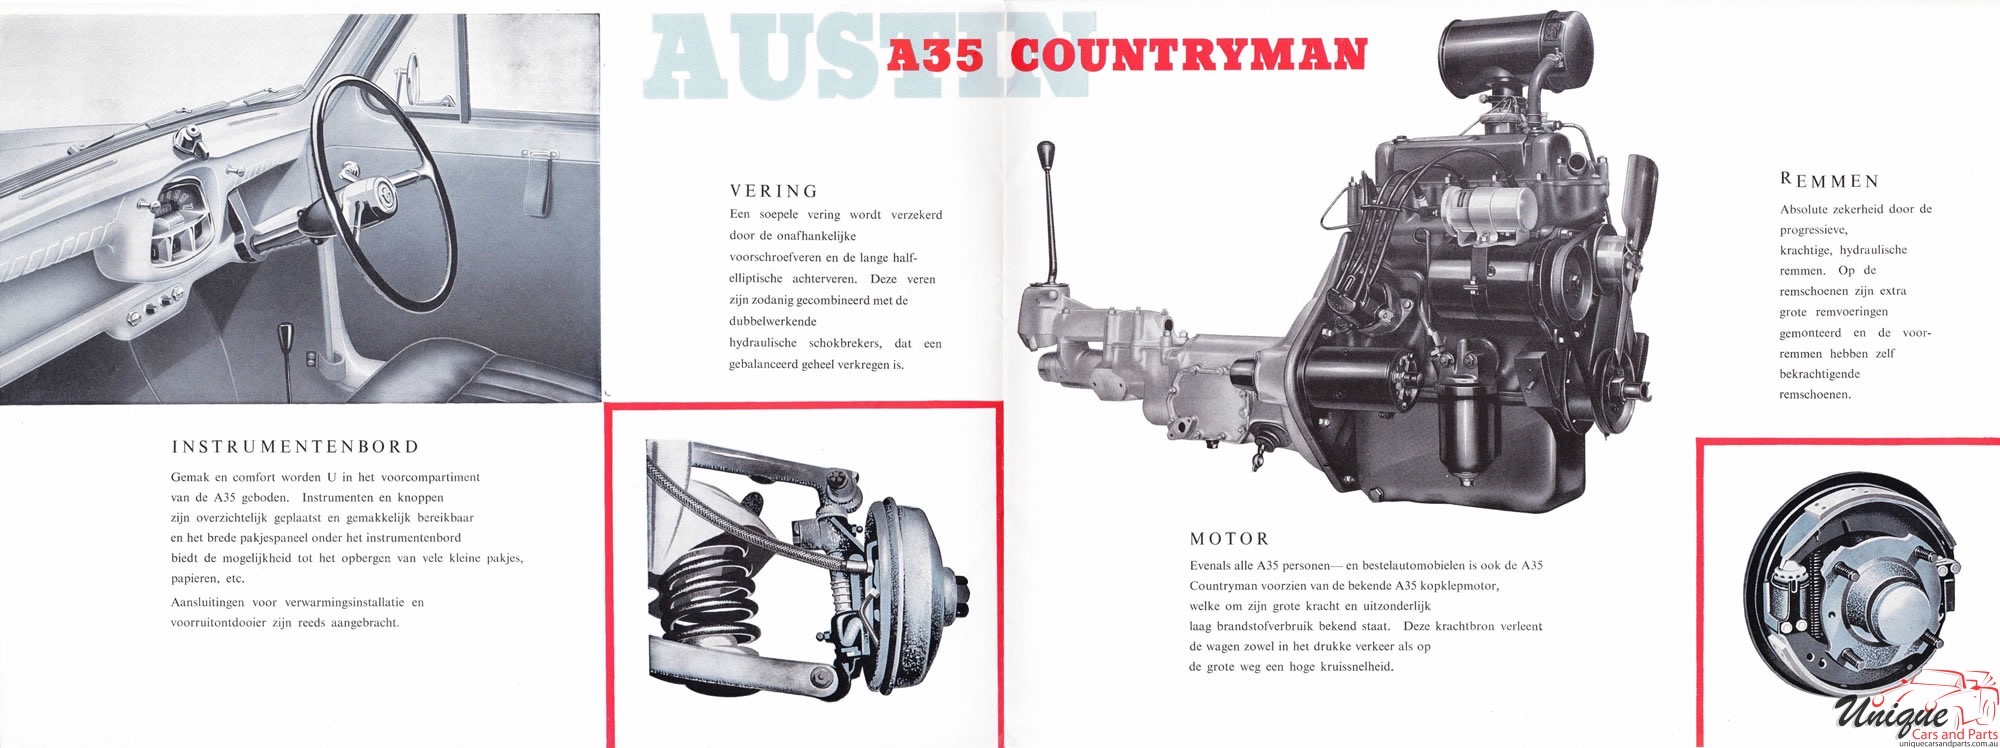 1957 Austin A35 Countryman Brochure Page 2